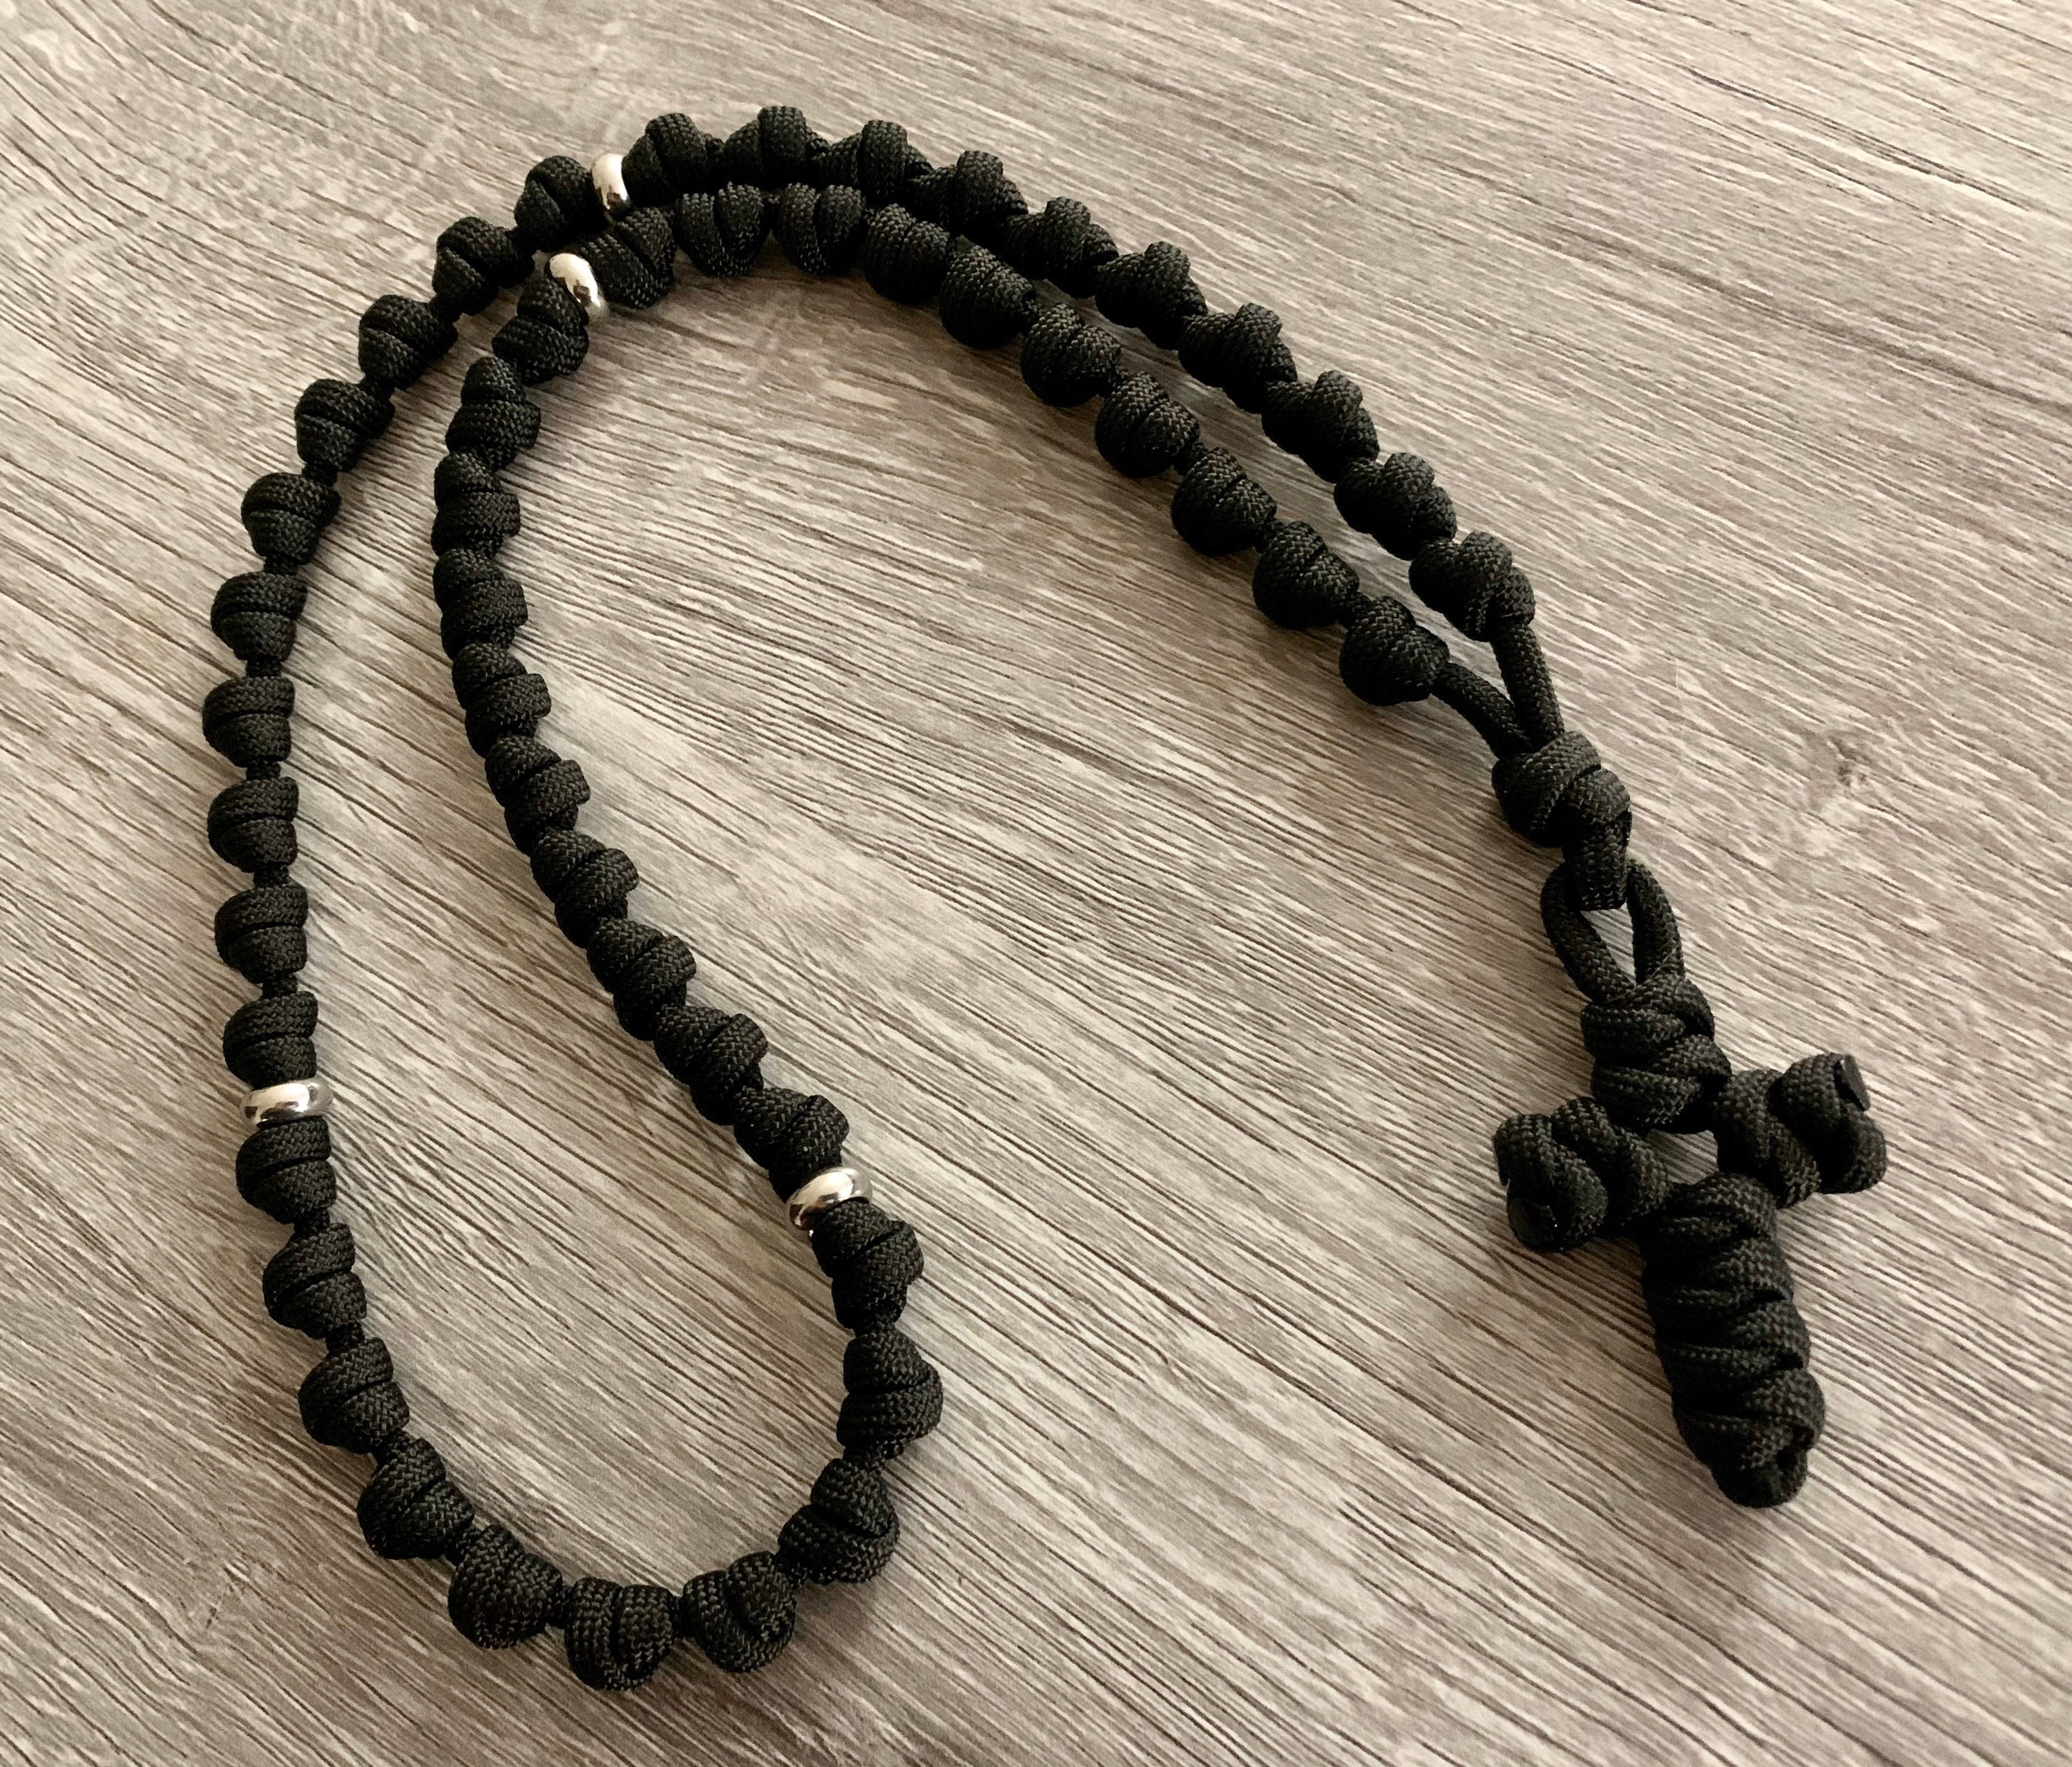 Black Eastern Orthodox Prayer Rope Chotki 50 Count Barrel Knots